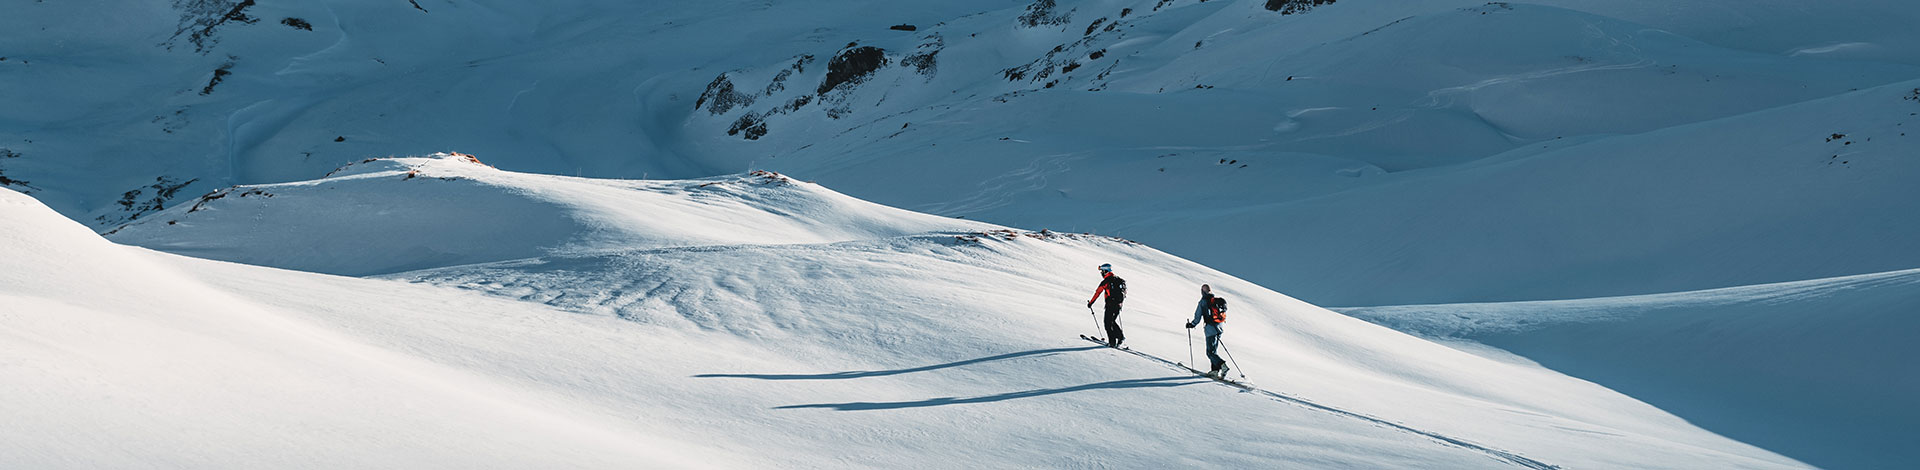 Ski touring in Les 3 Vallées